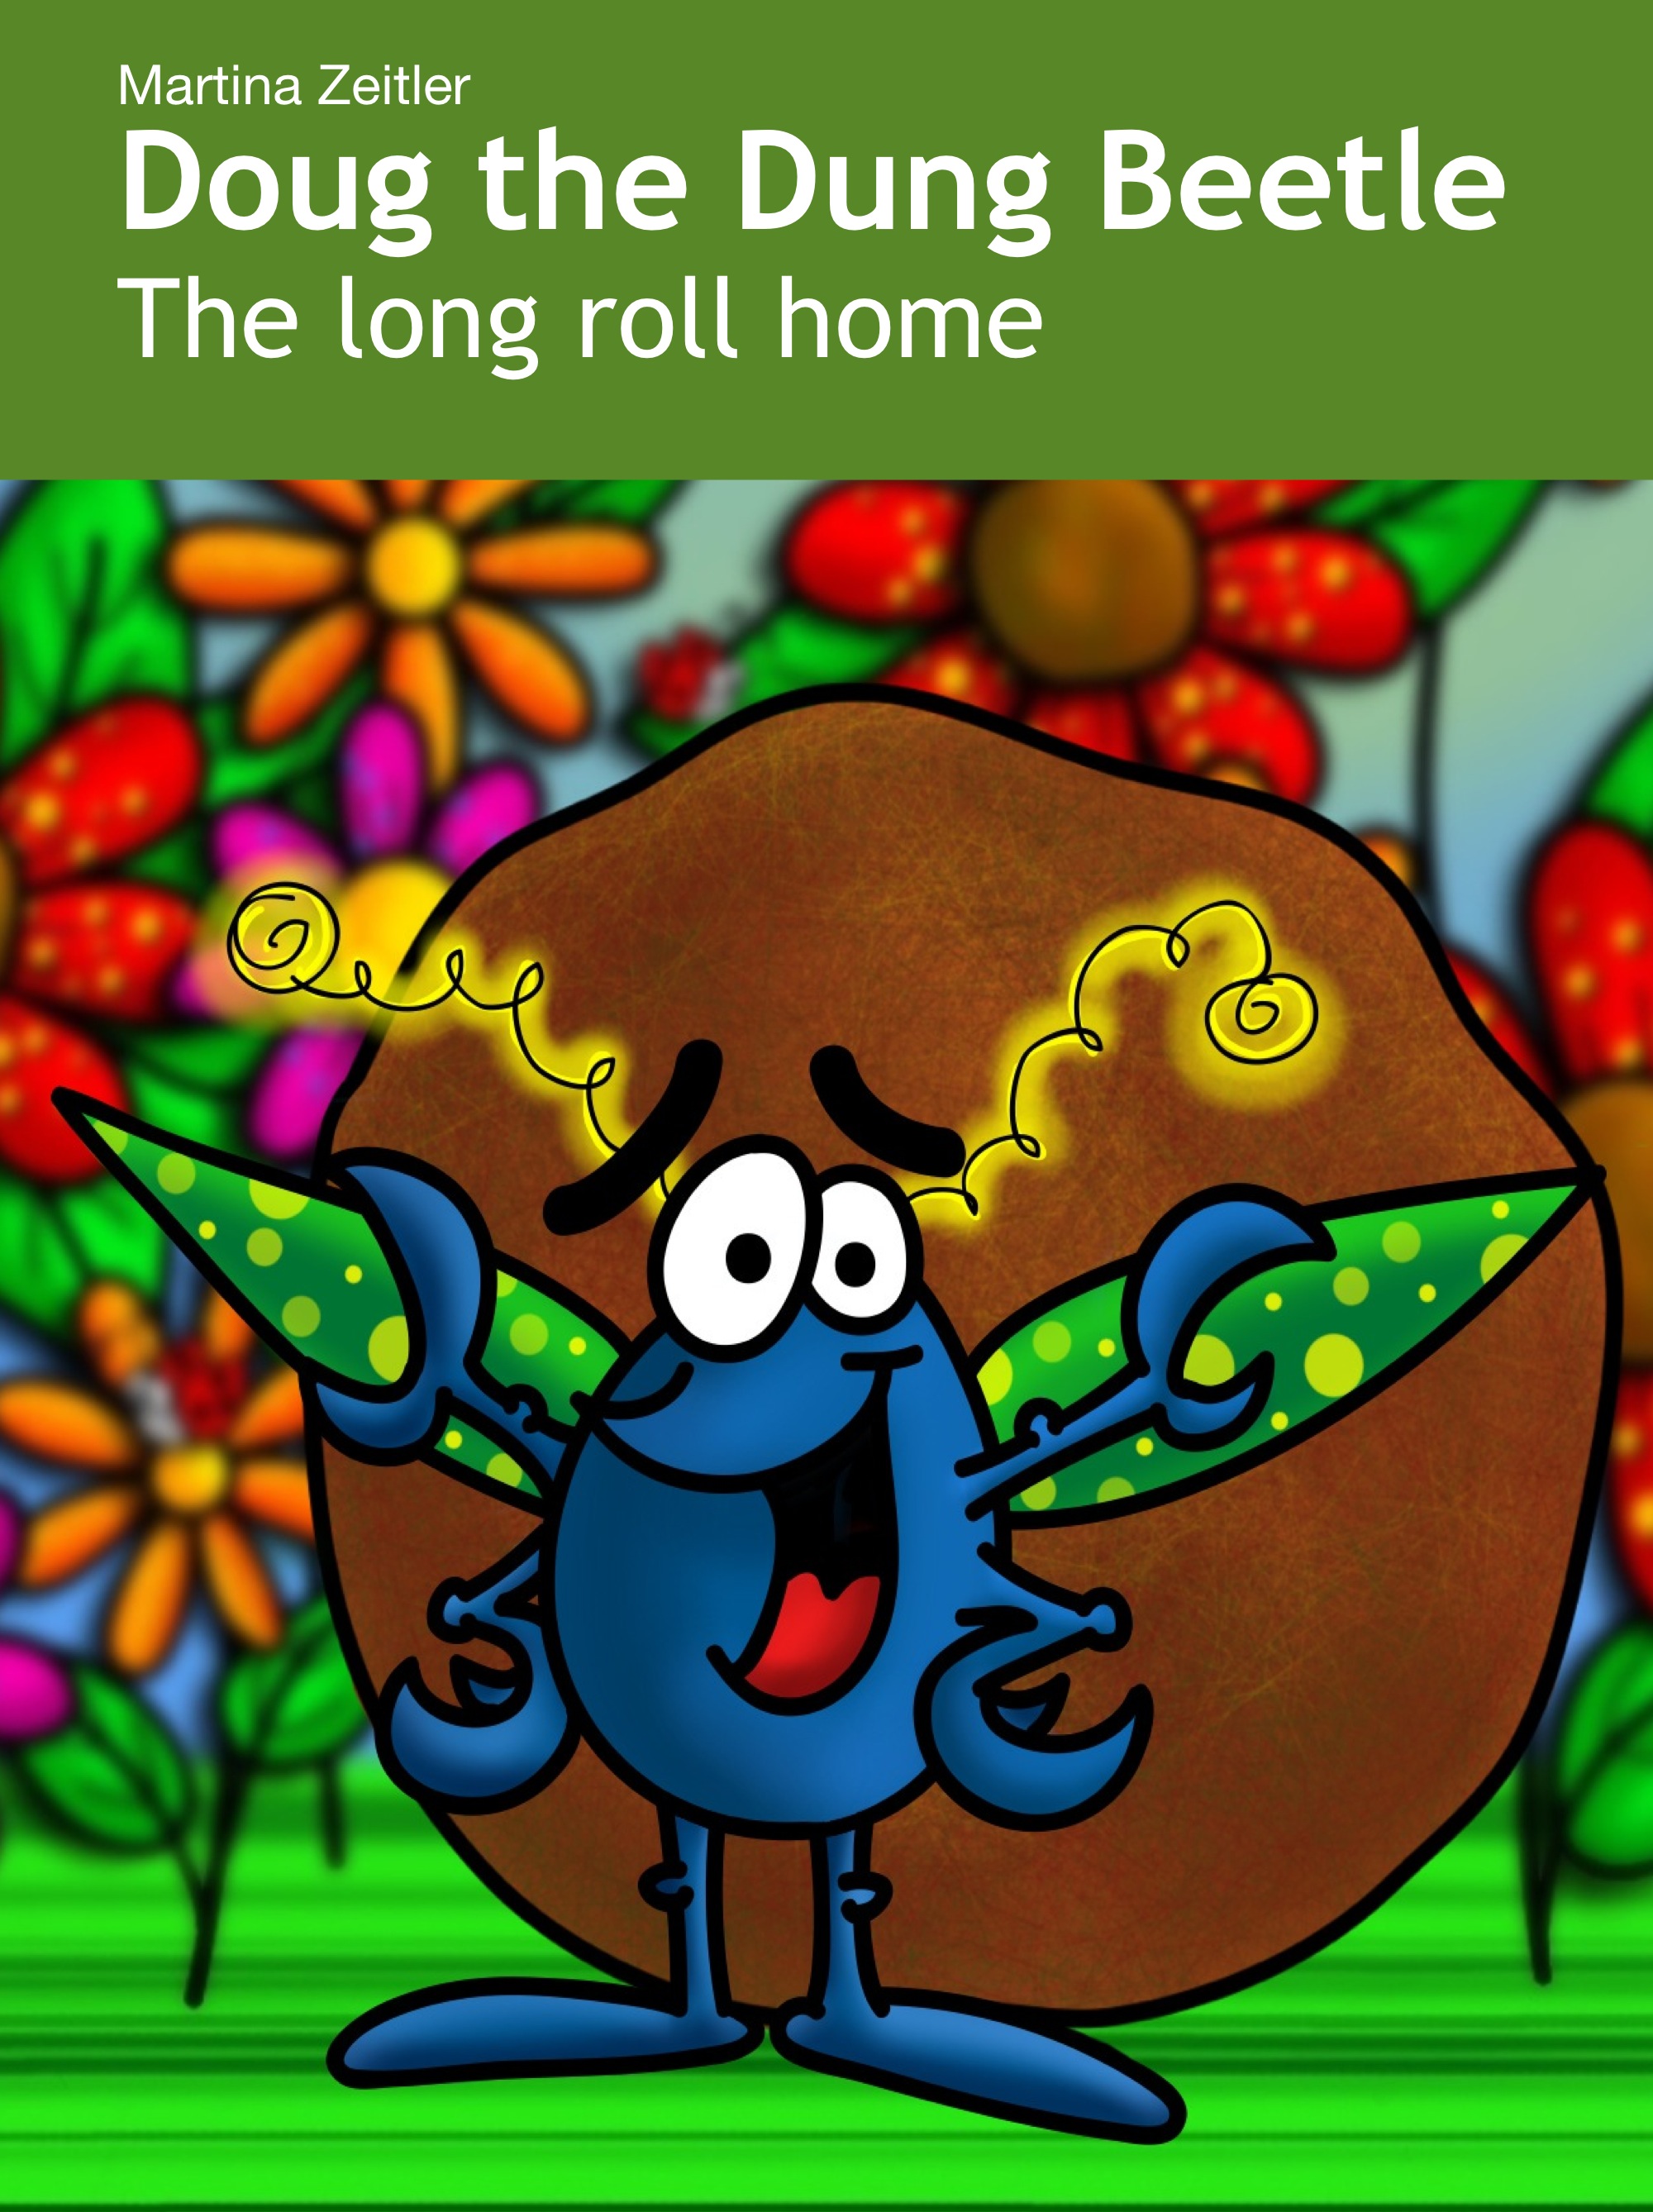 Kids book starring a dung beetle